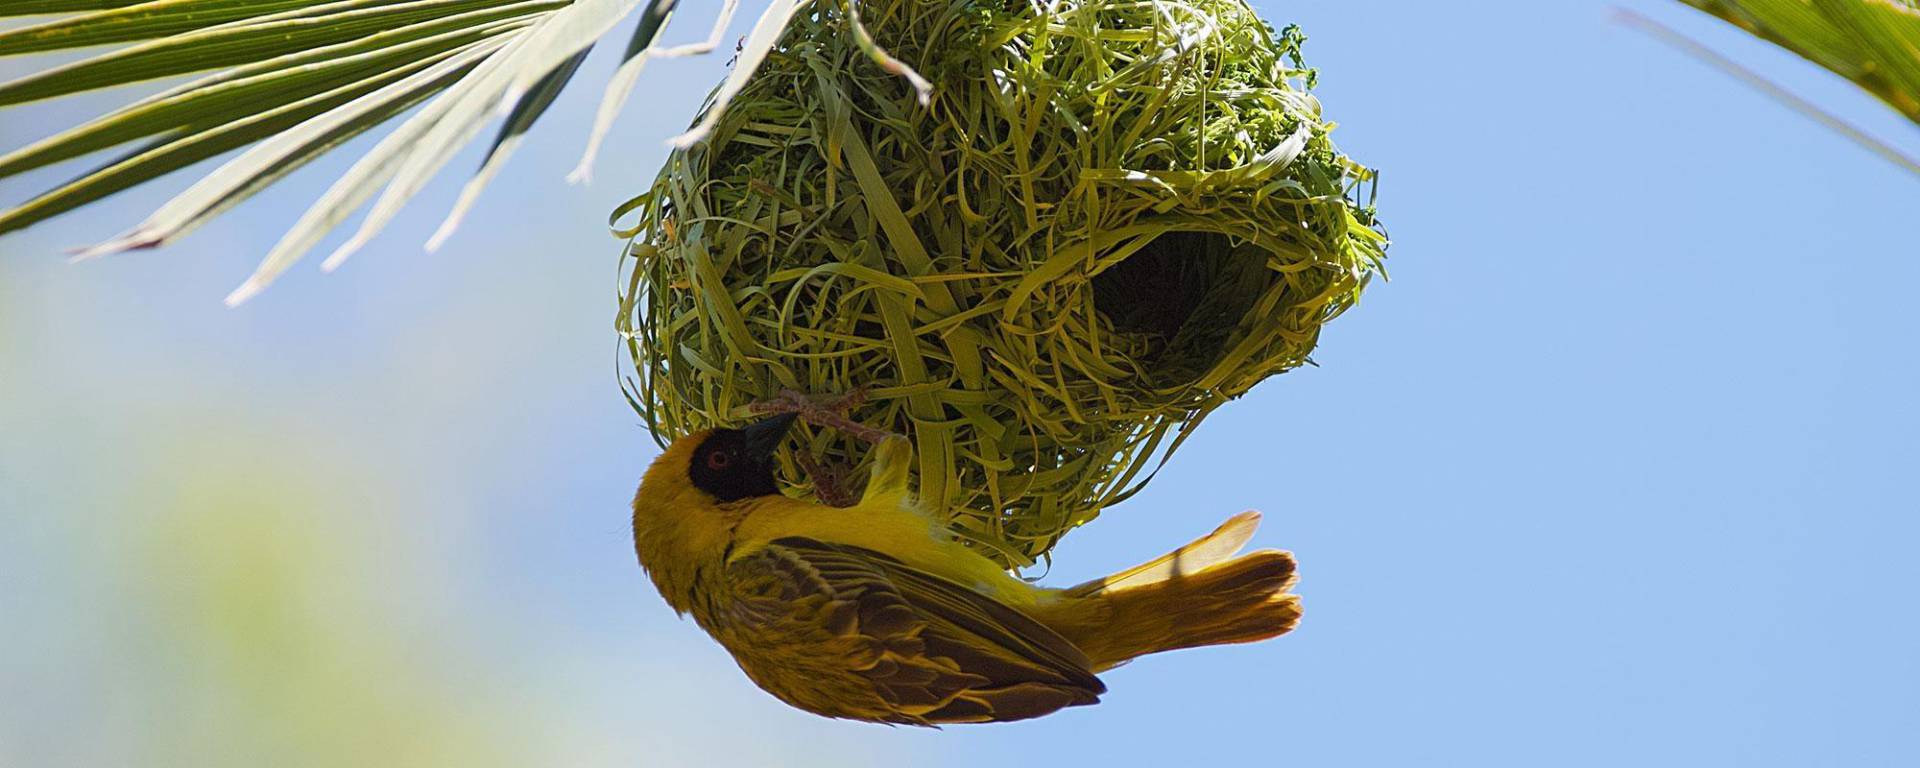 Weaver bird building its nest